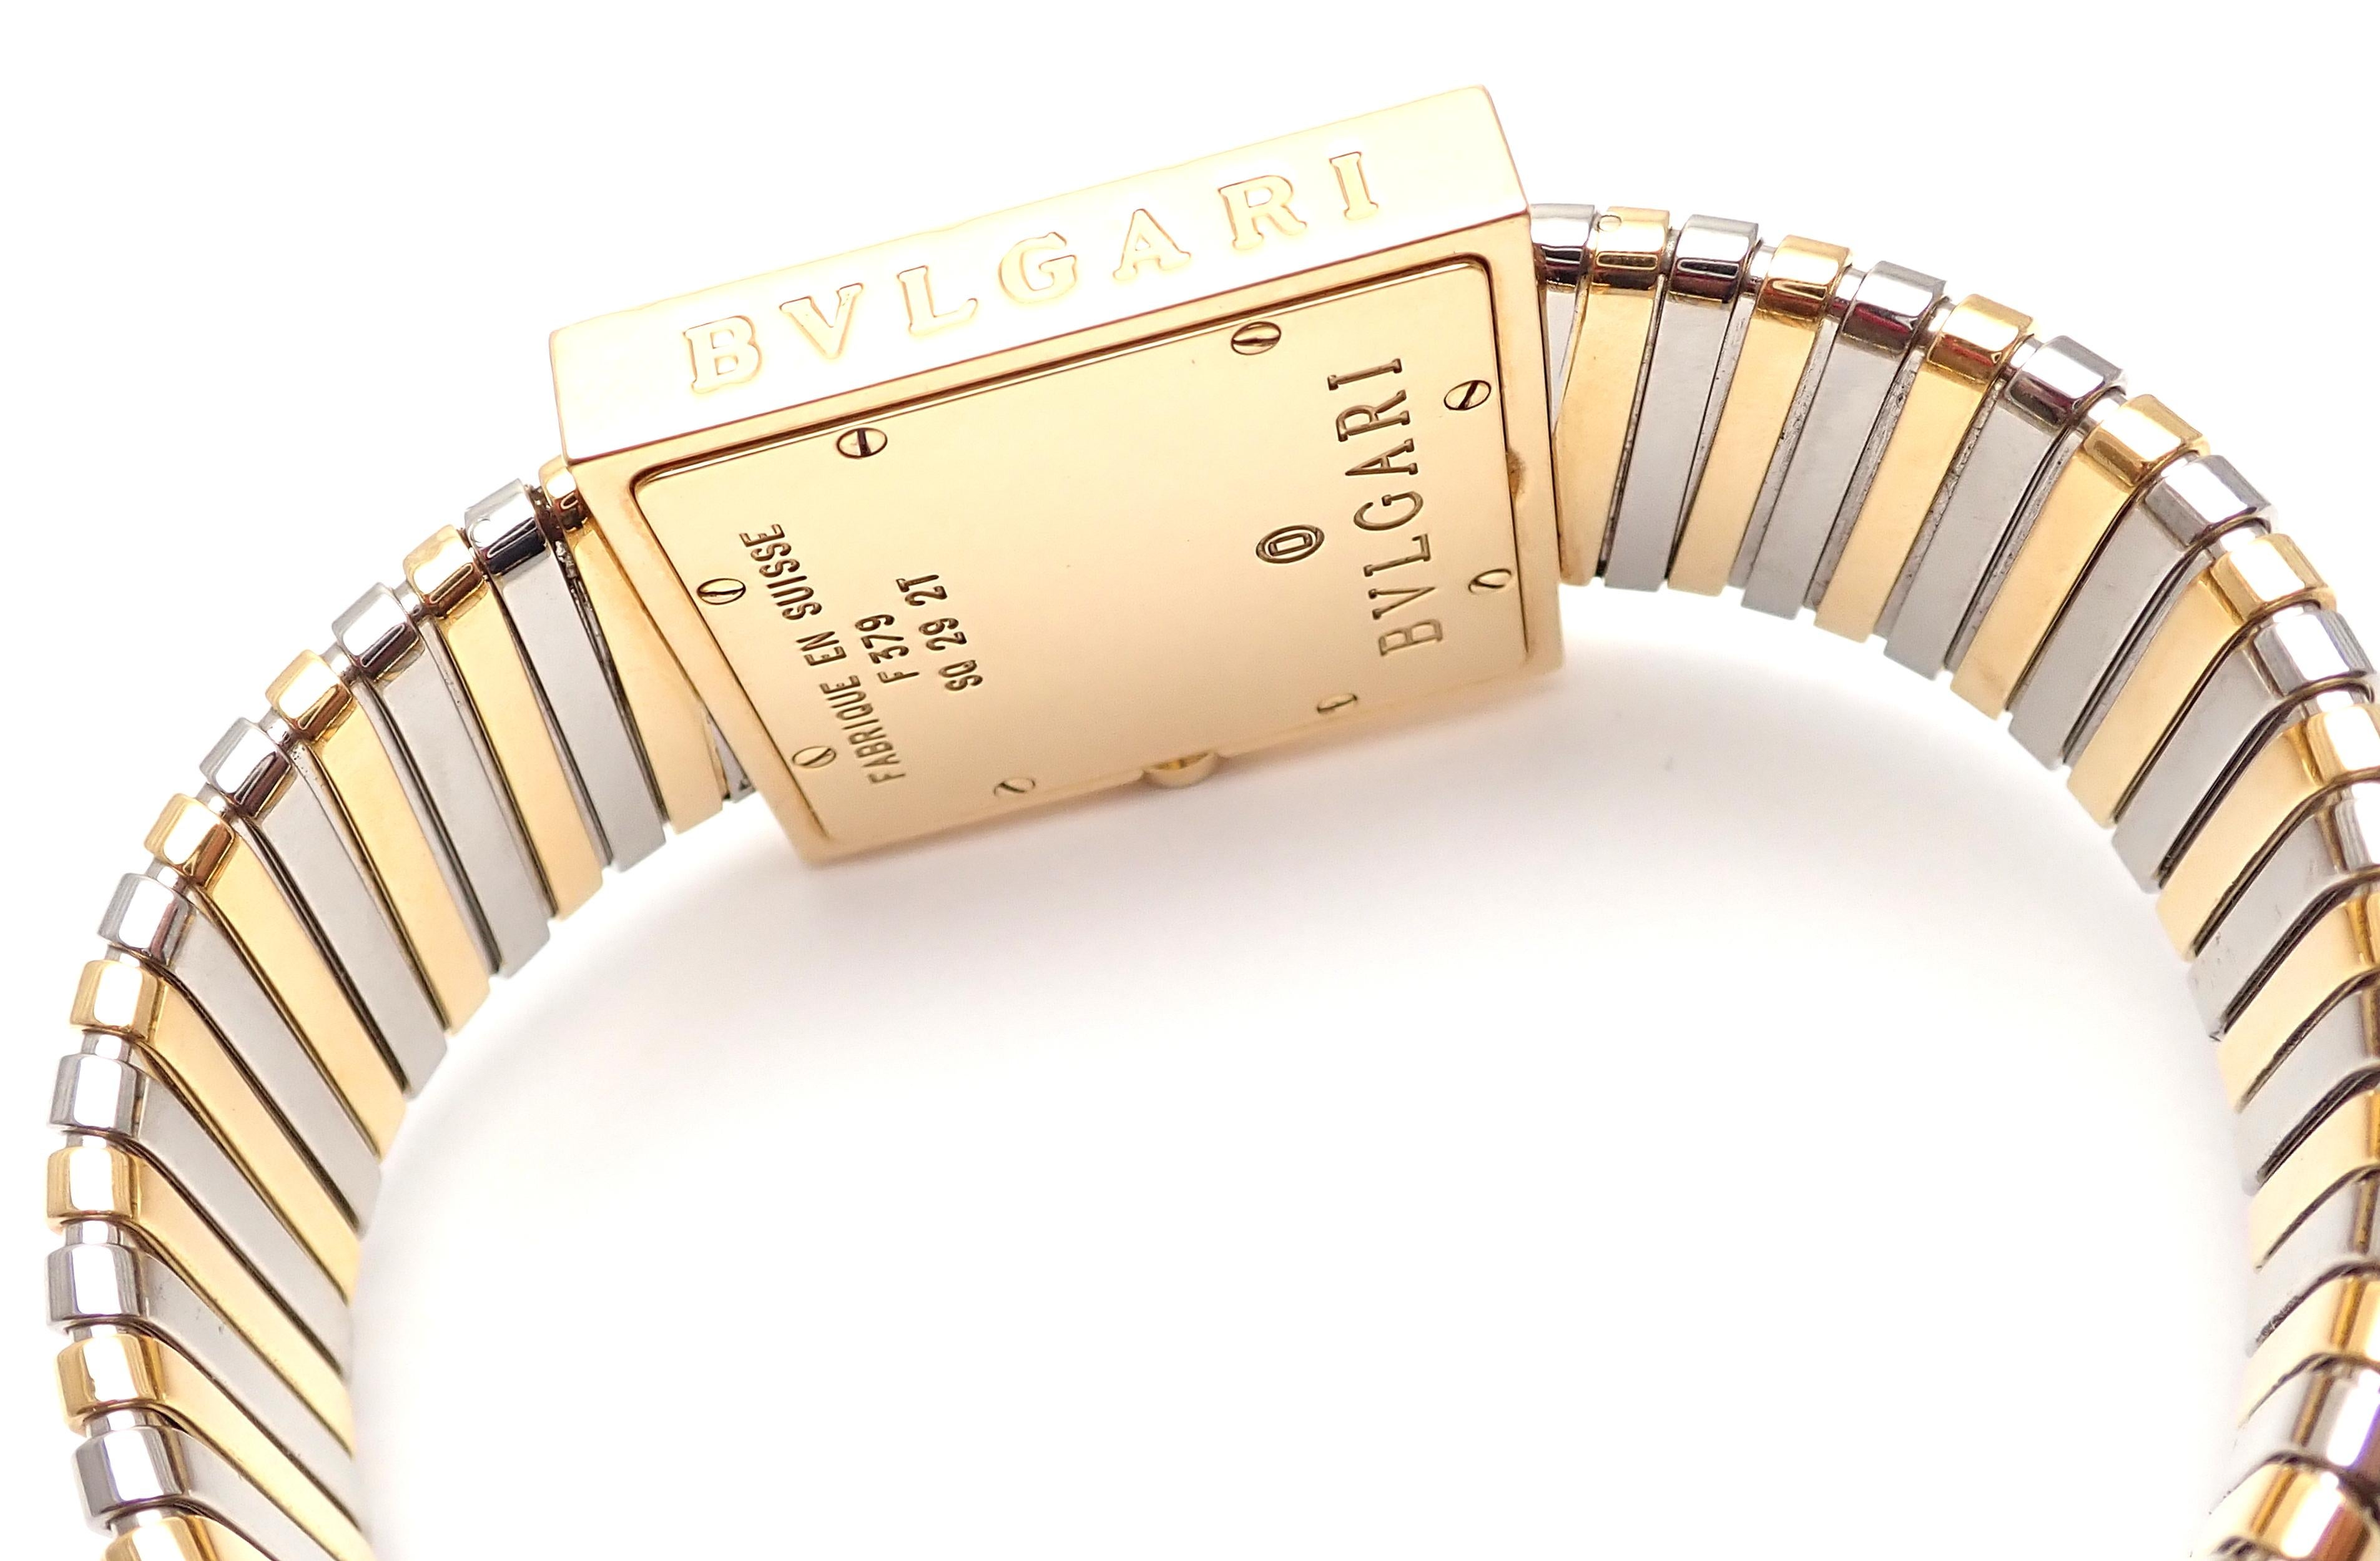 Bulgari Tubogas Quadrato Yellow Gold and Stainless Steel Bracelet Watch SQ292T 2